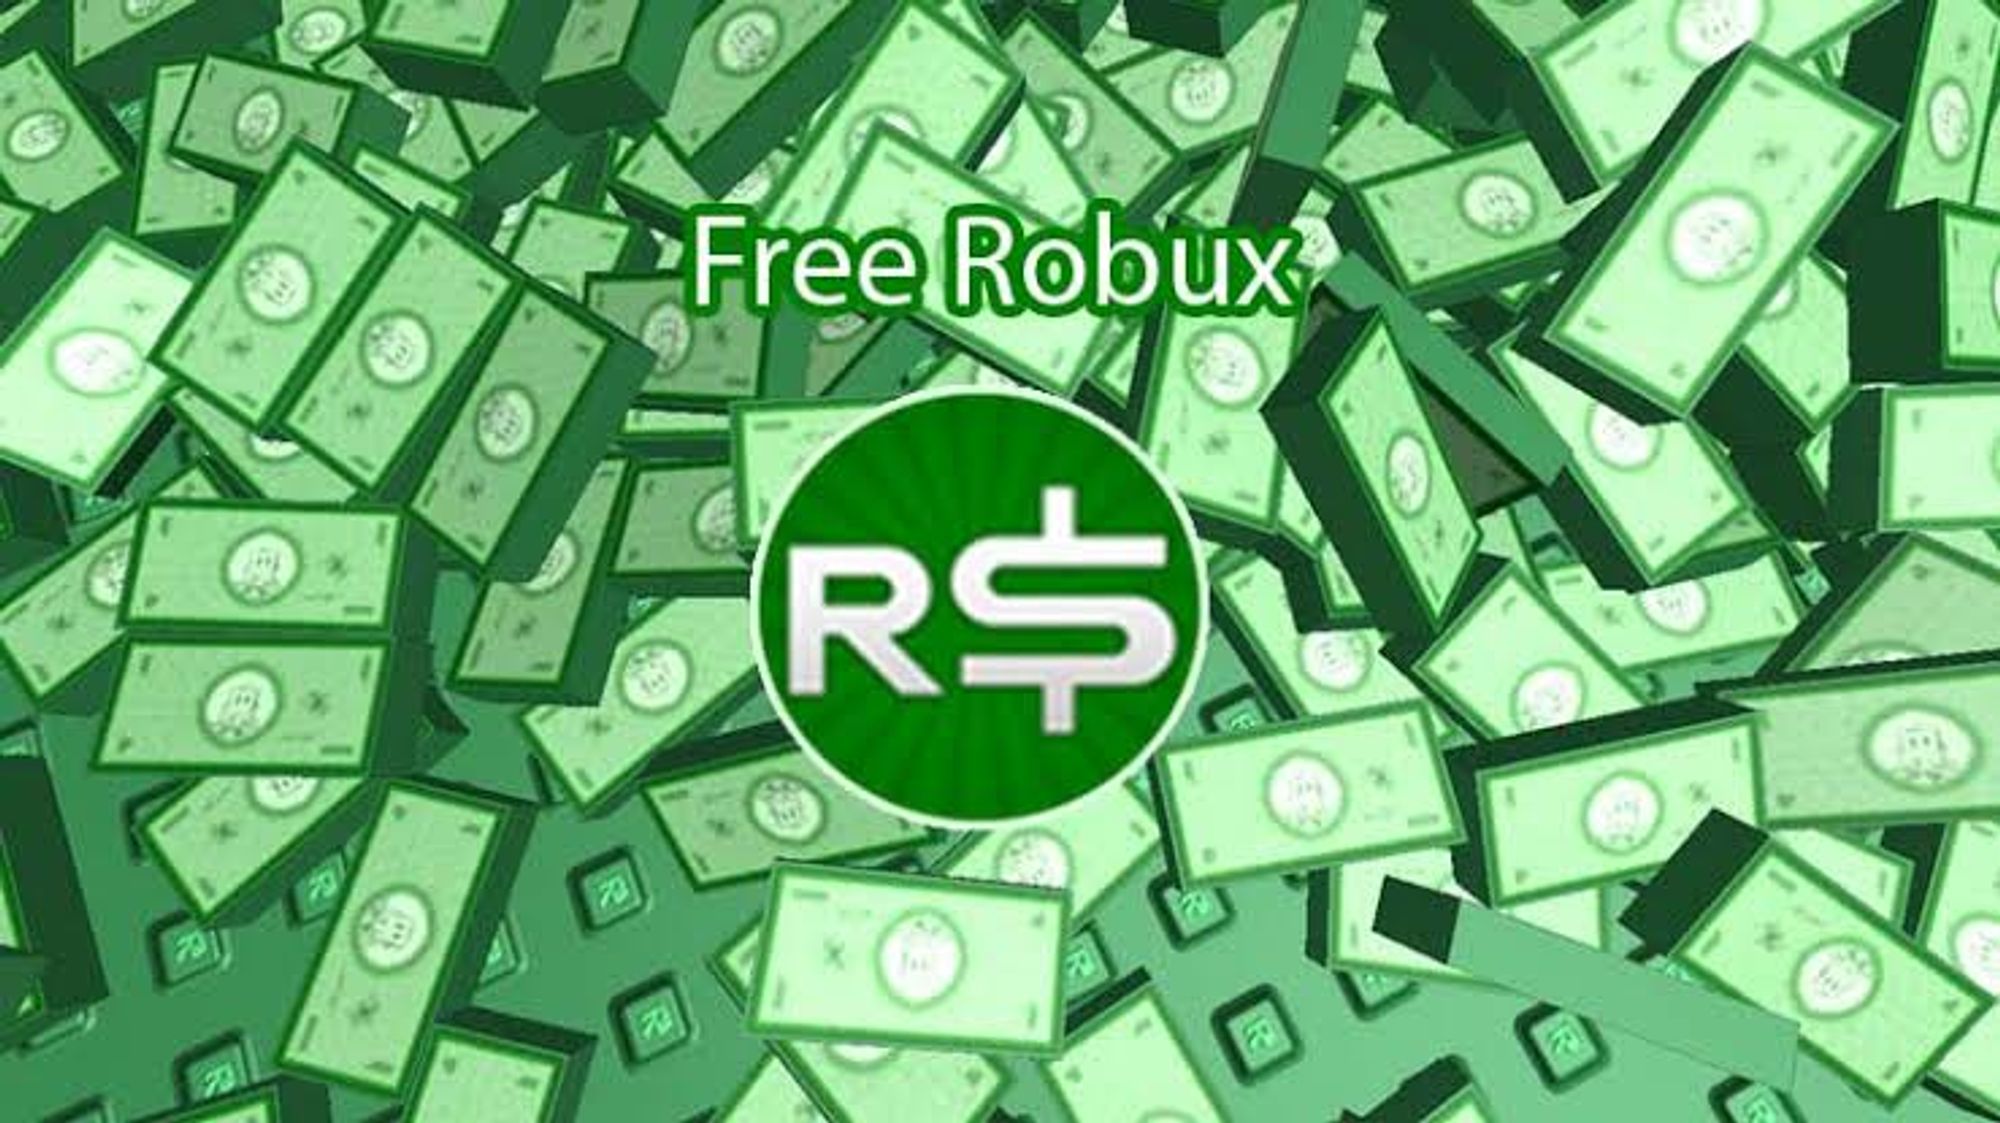 Free Robux Roblox Generator Free Robux No Survey No Human Verification - how to get free robux ipad 2019 no human verification